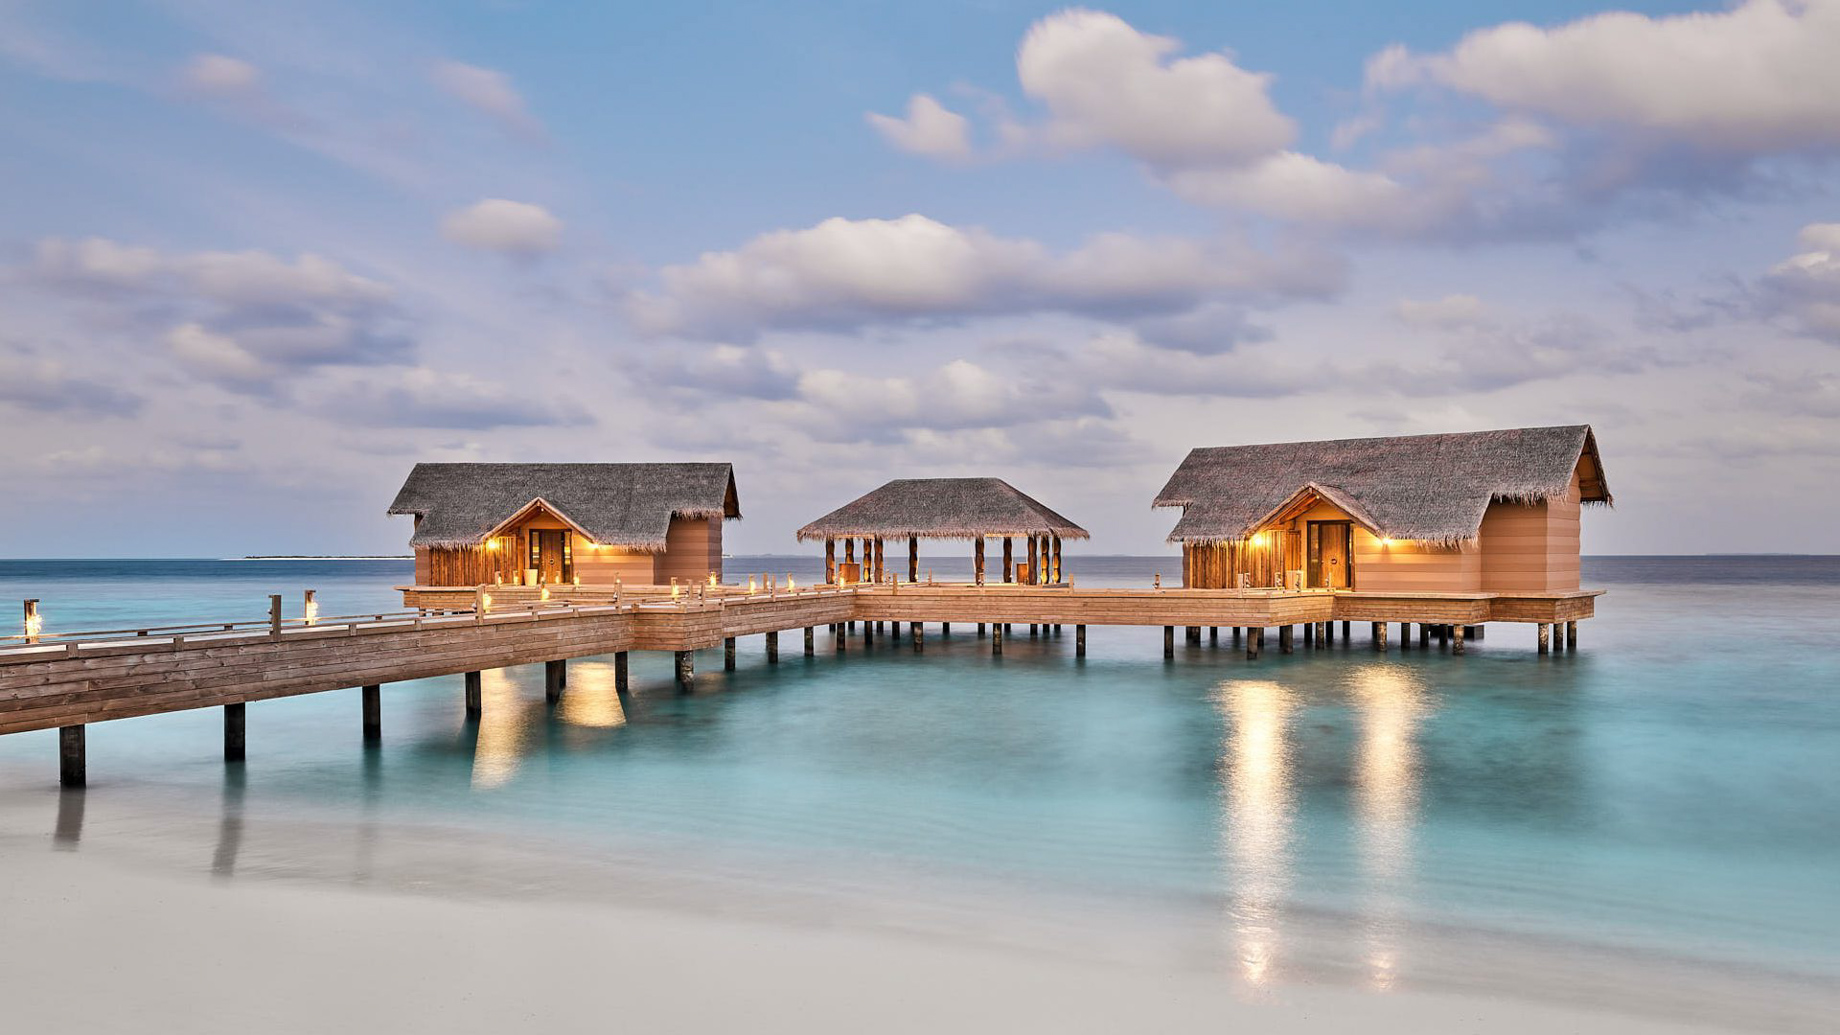 JOALI Maldives Resort - Muravandhoo Island, Maldives - Experience Pure Serenity